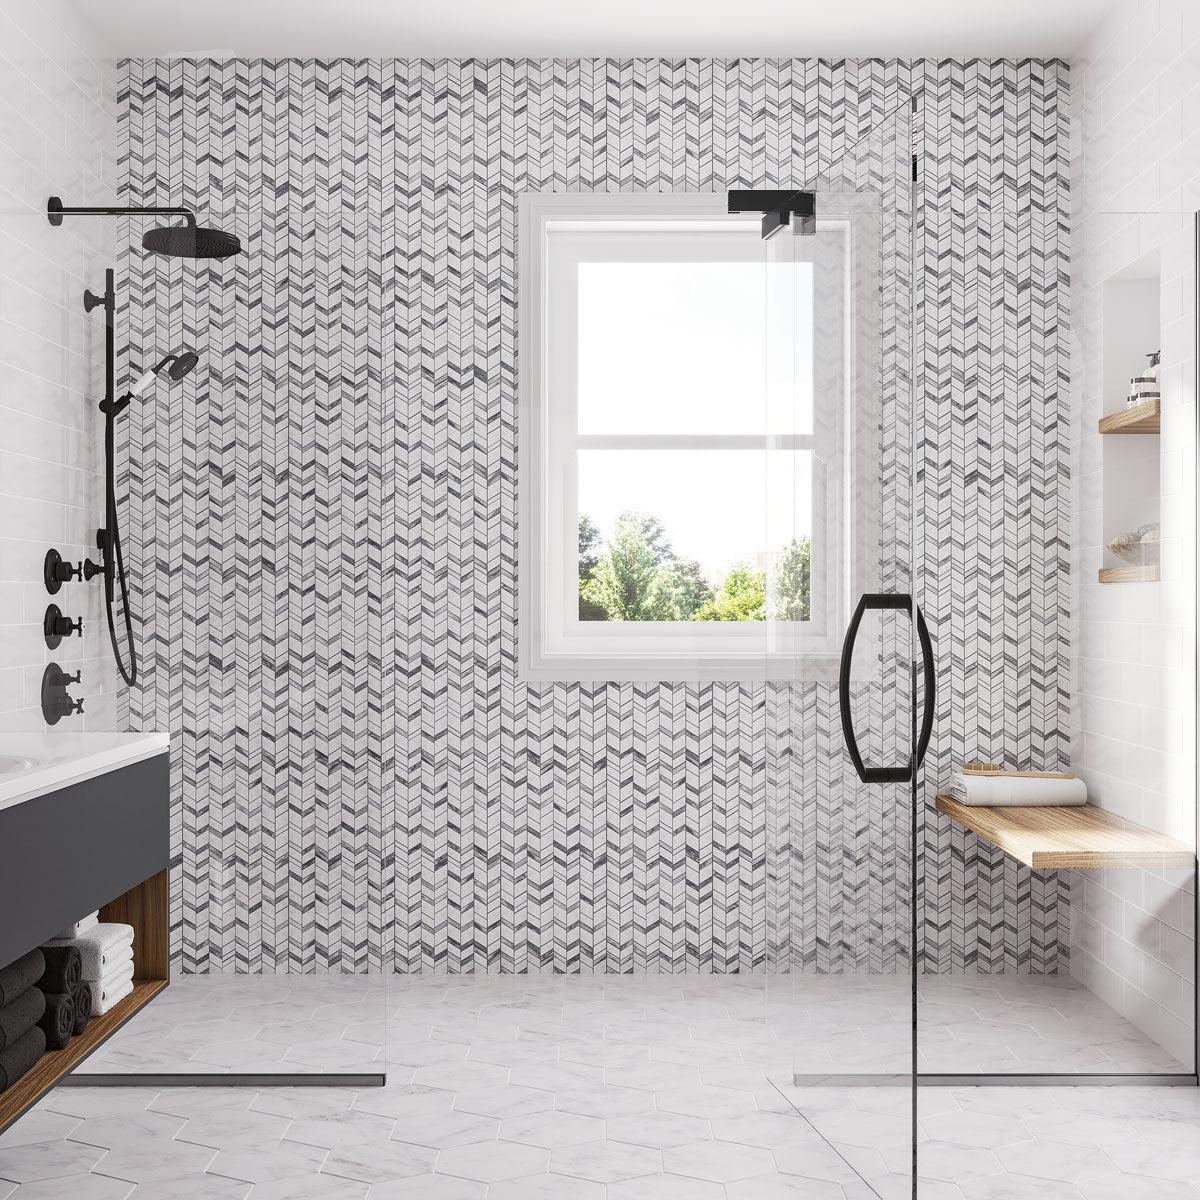 Glass shower enclosure with Striped Herringbone Carrara & Bardiglio Marble Mosaic Tile walls